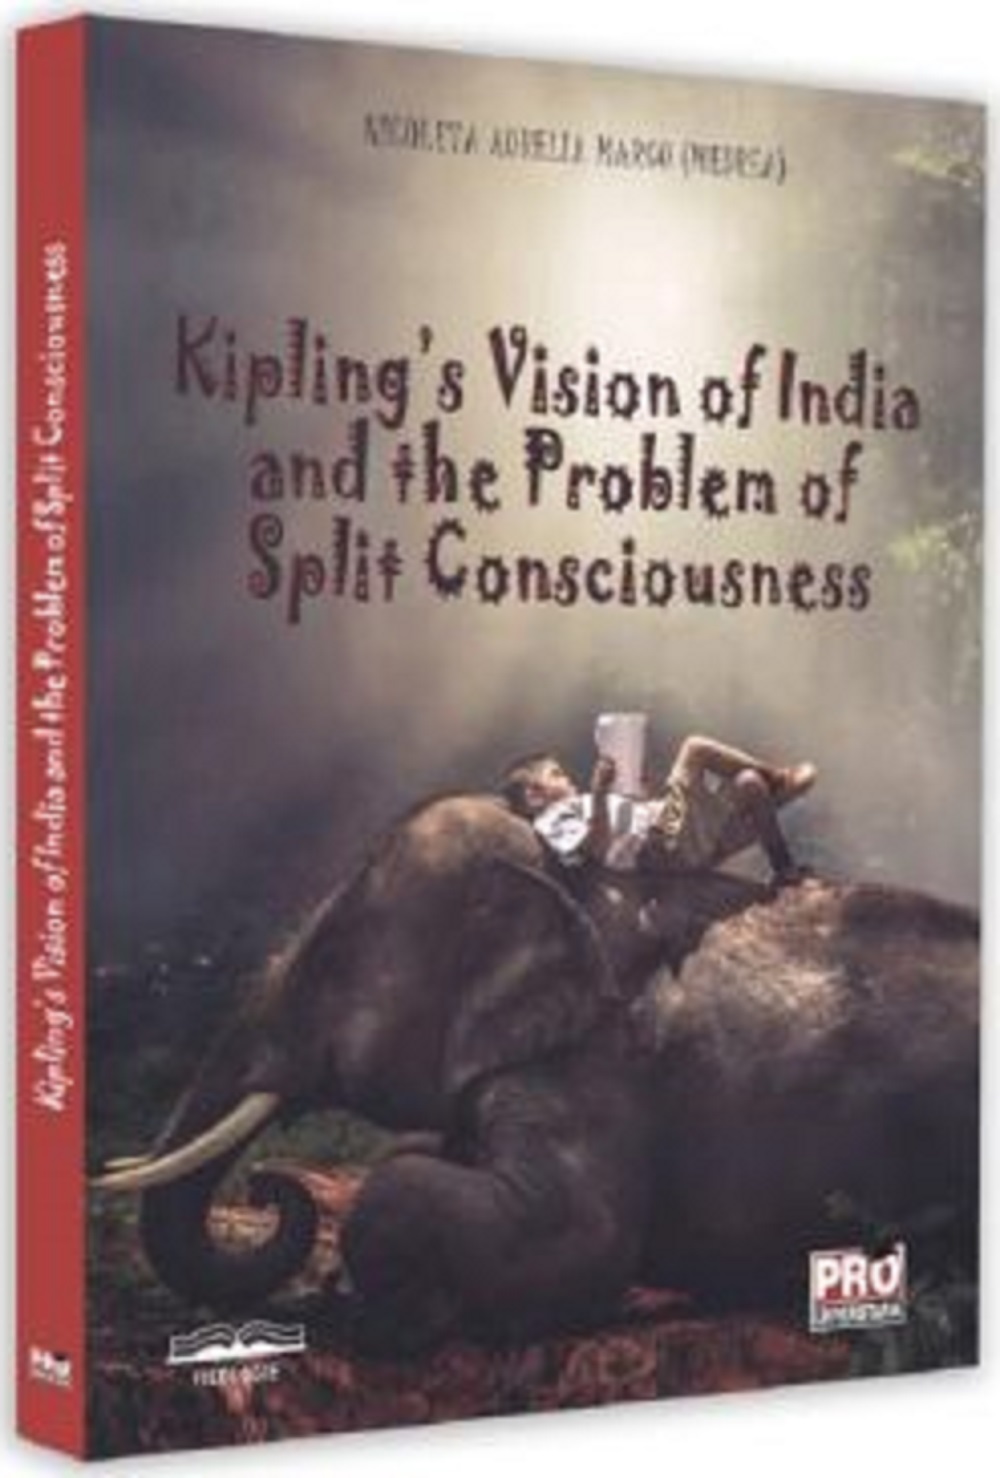 Kipling\'s Vision of India and the Problem of Split Consciousness | Nicoleta Aurelia Marcu (Medrea)